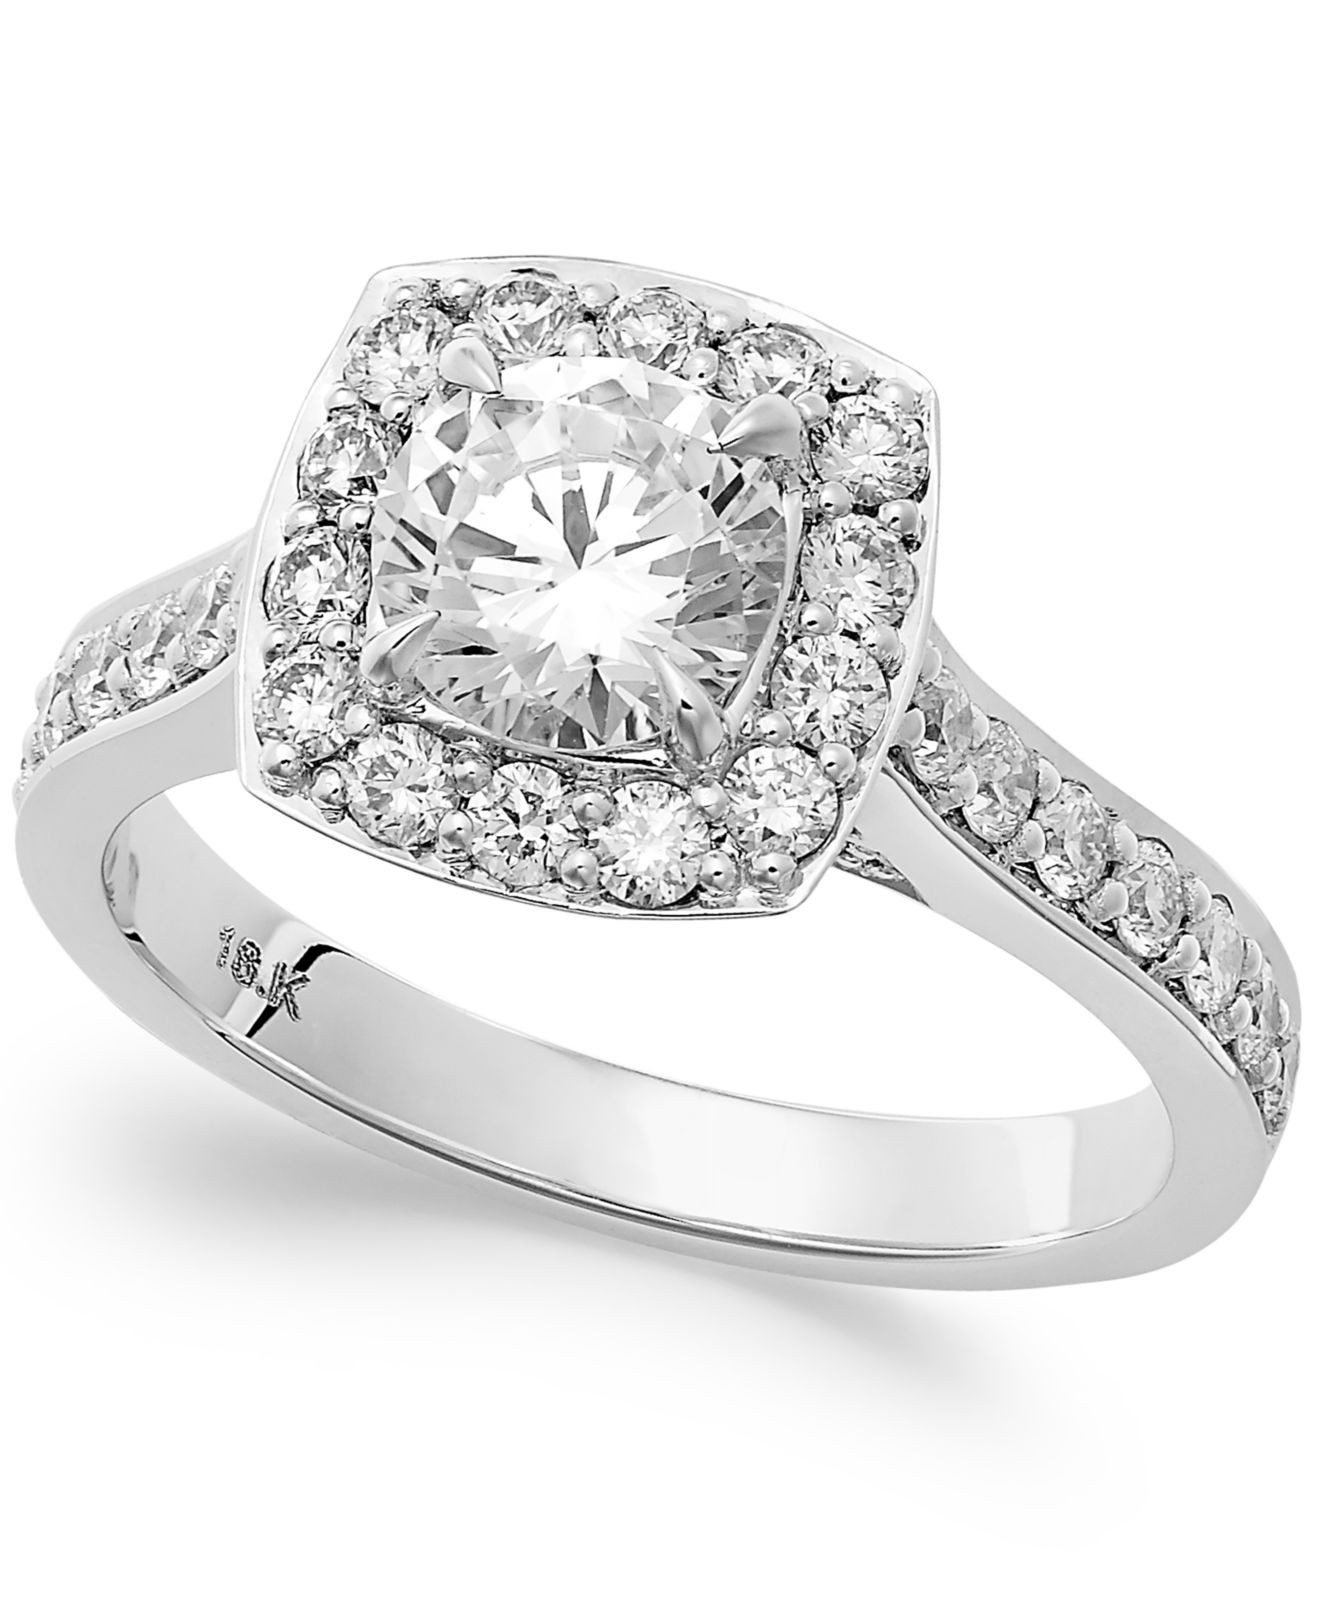 Macys Diamond Rings
 Macy s 18K White Gold Certified Diamond Halo Engagement